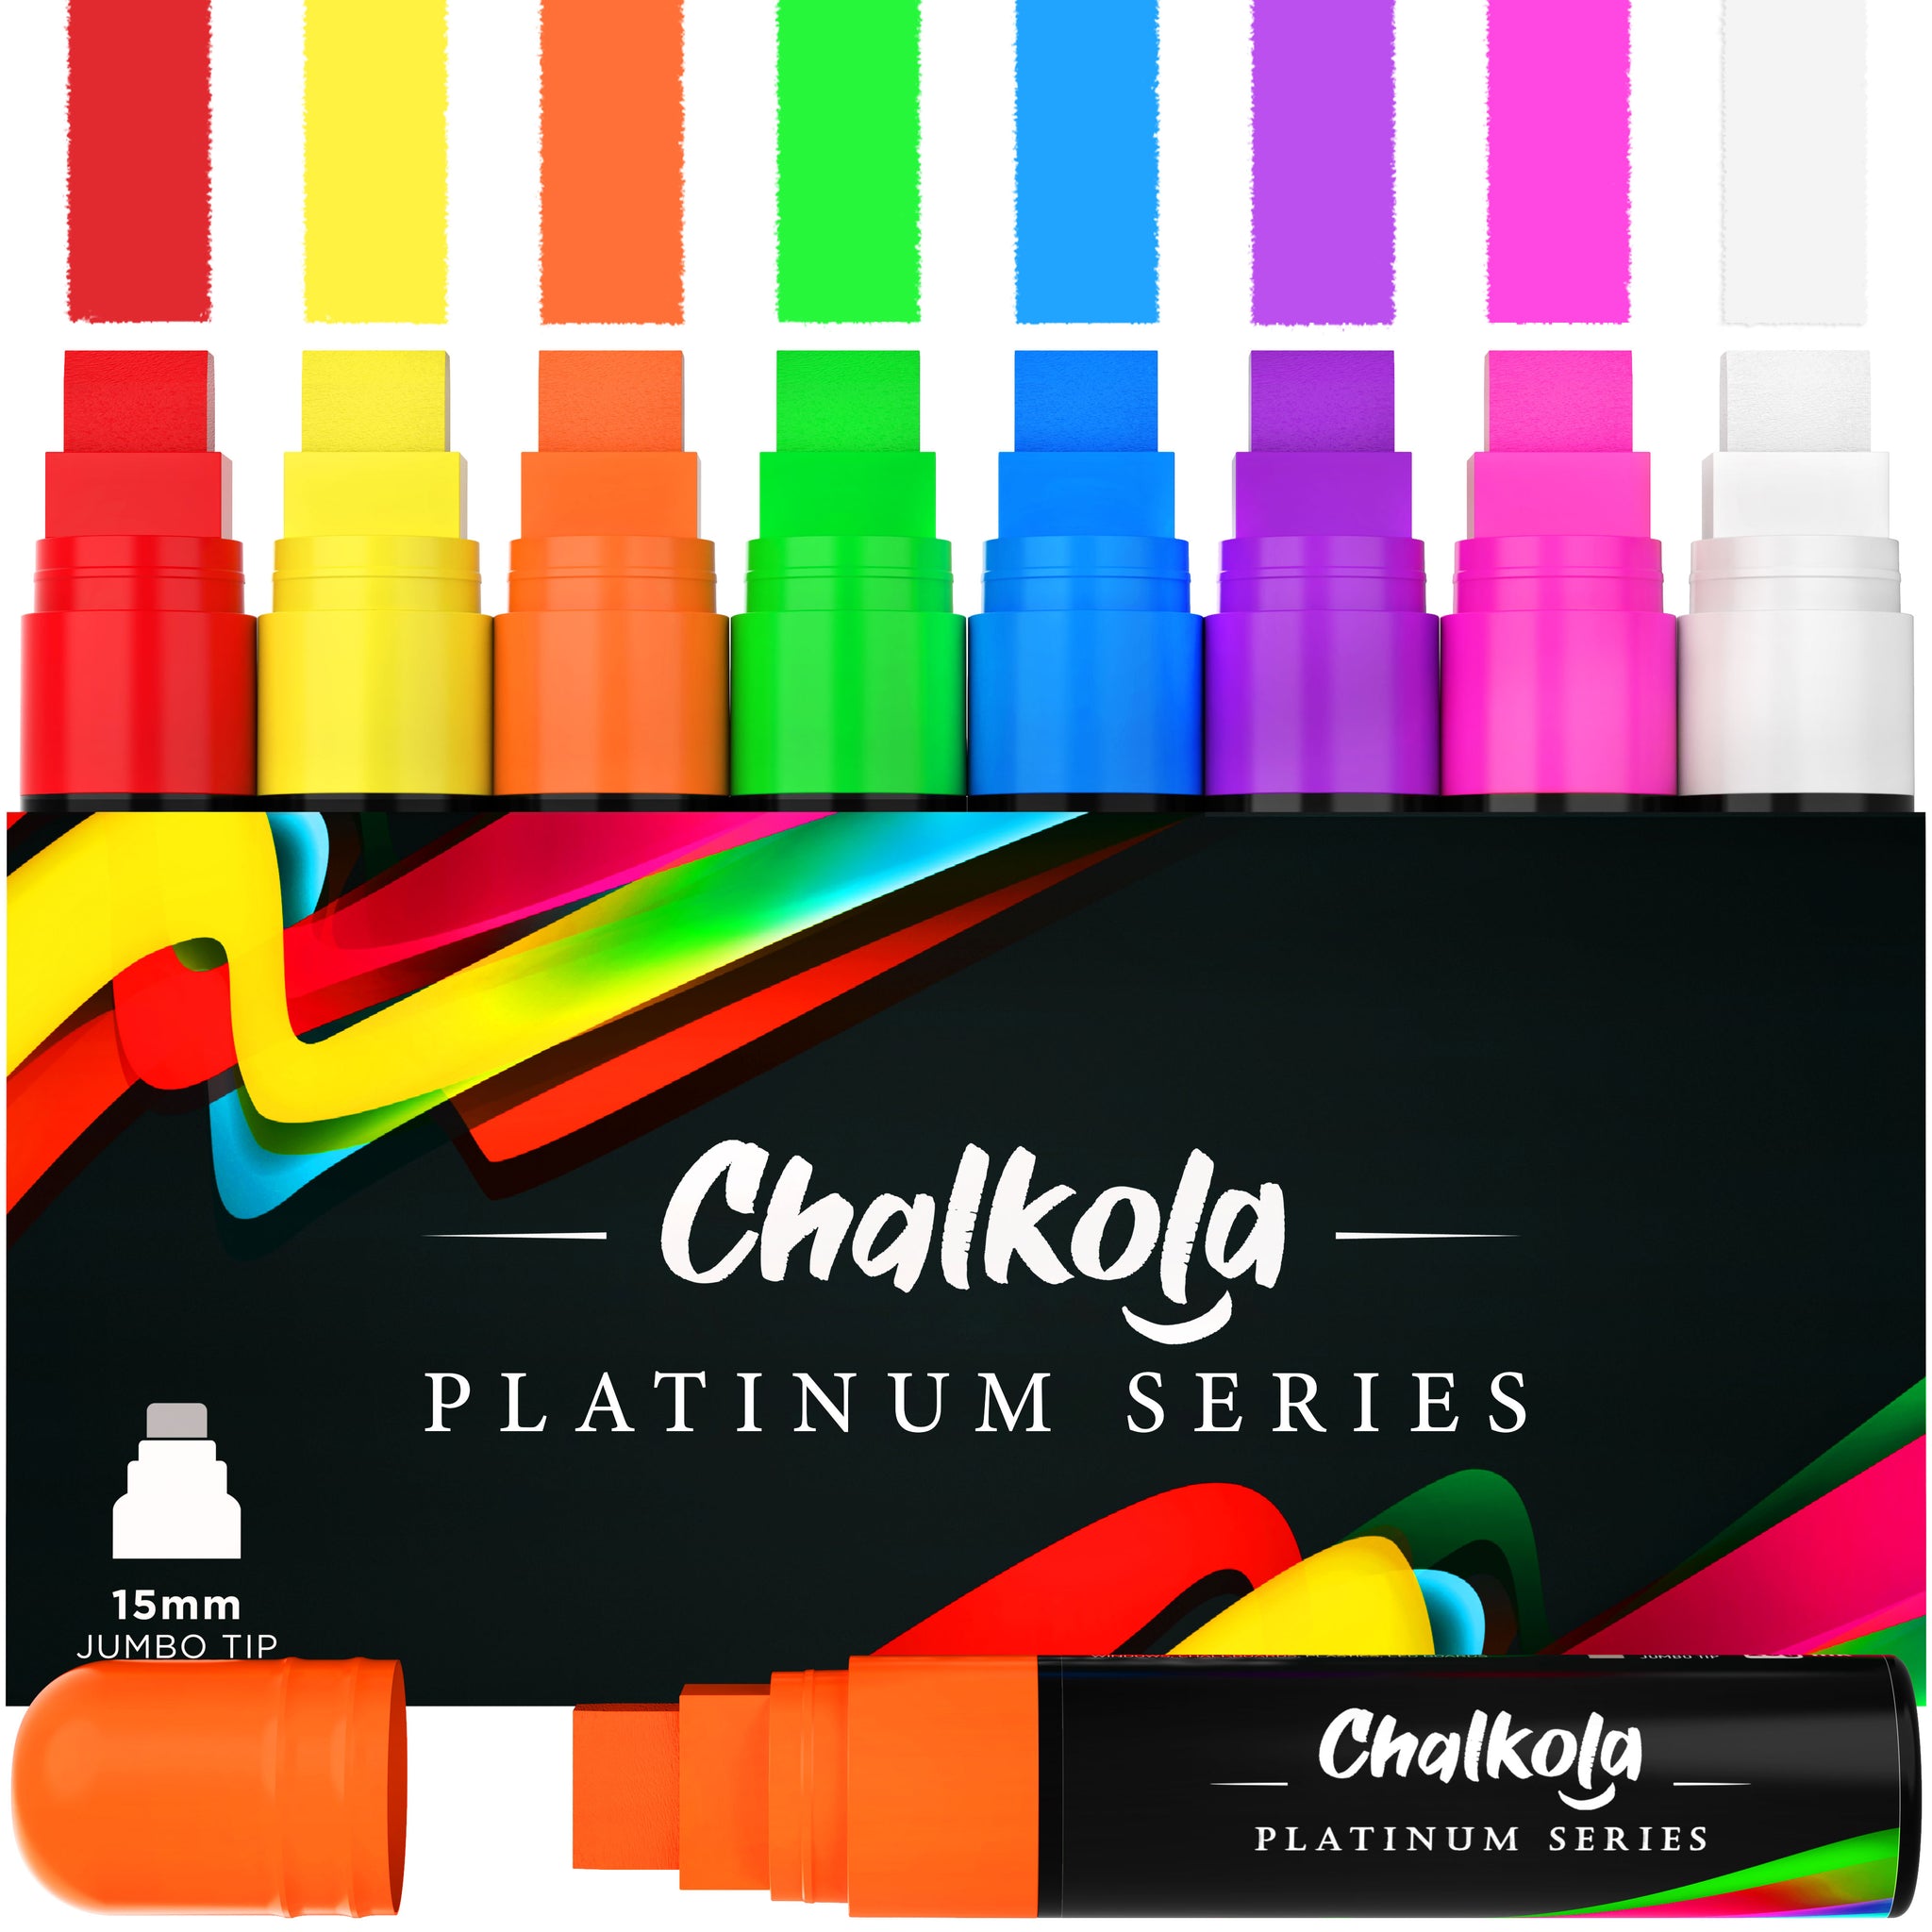 Acrylic Paint Marker Pens - Pack of 15 - Chalkola Art Supply